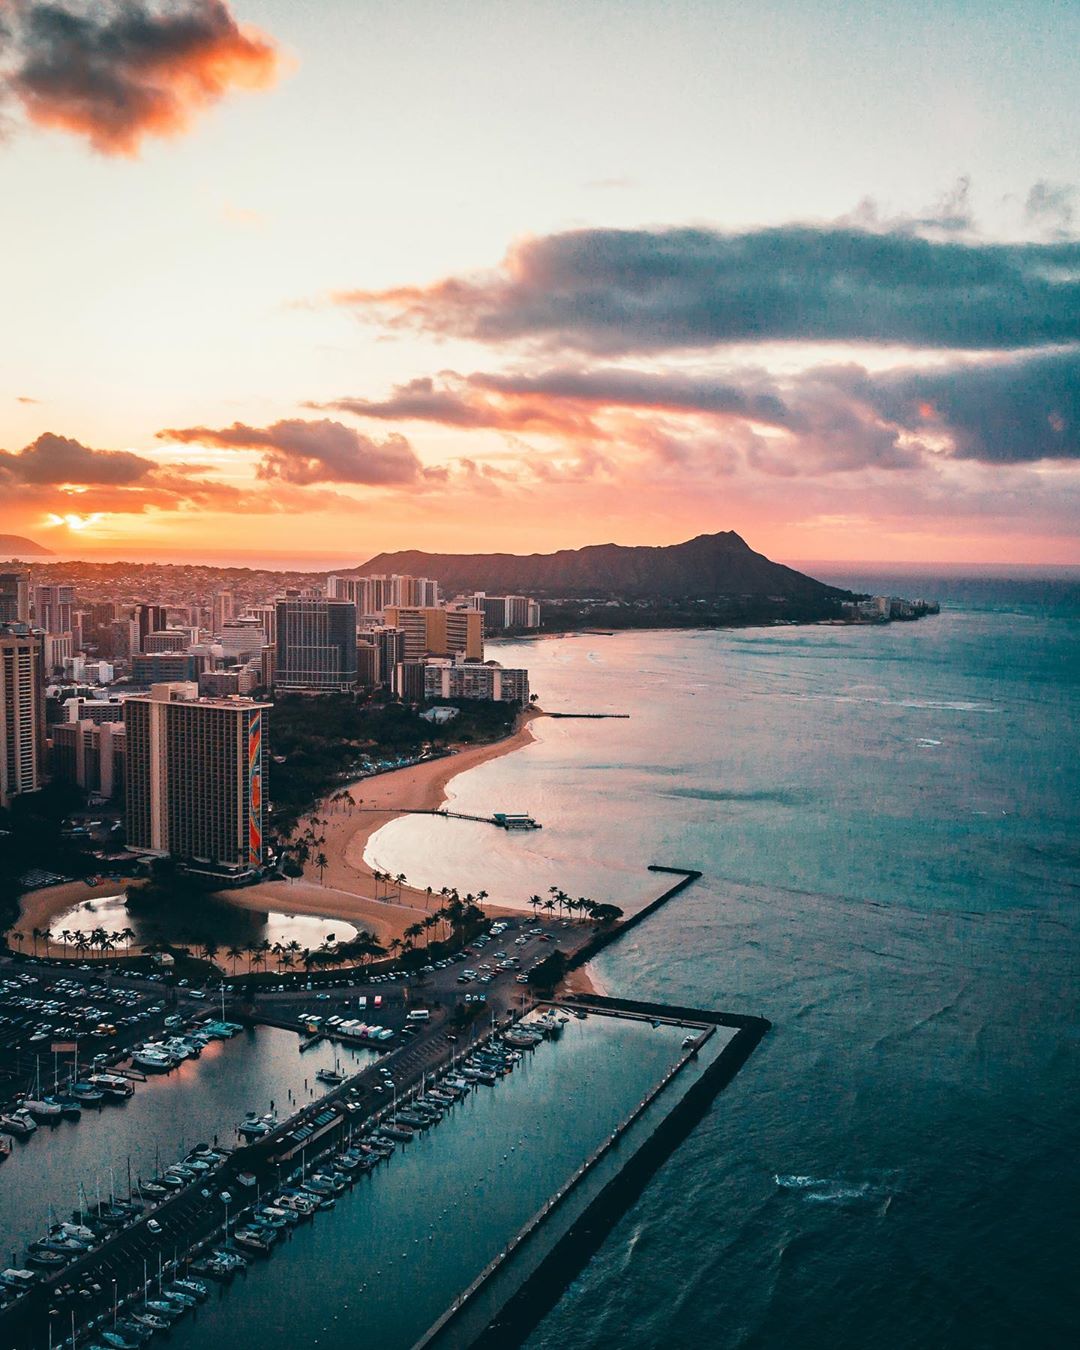 Coastal View of Honolulu, HI at Sunset. Photo by Instagram user @voros_beni